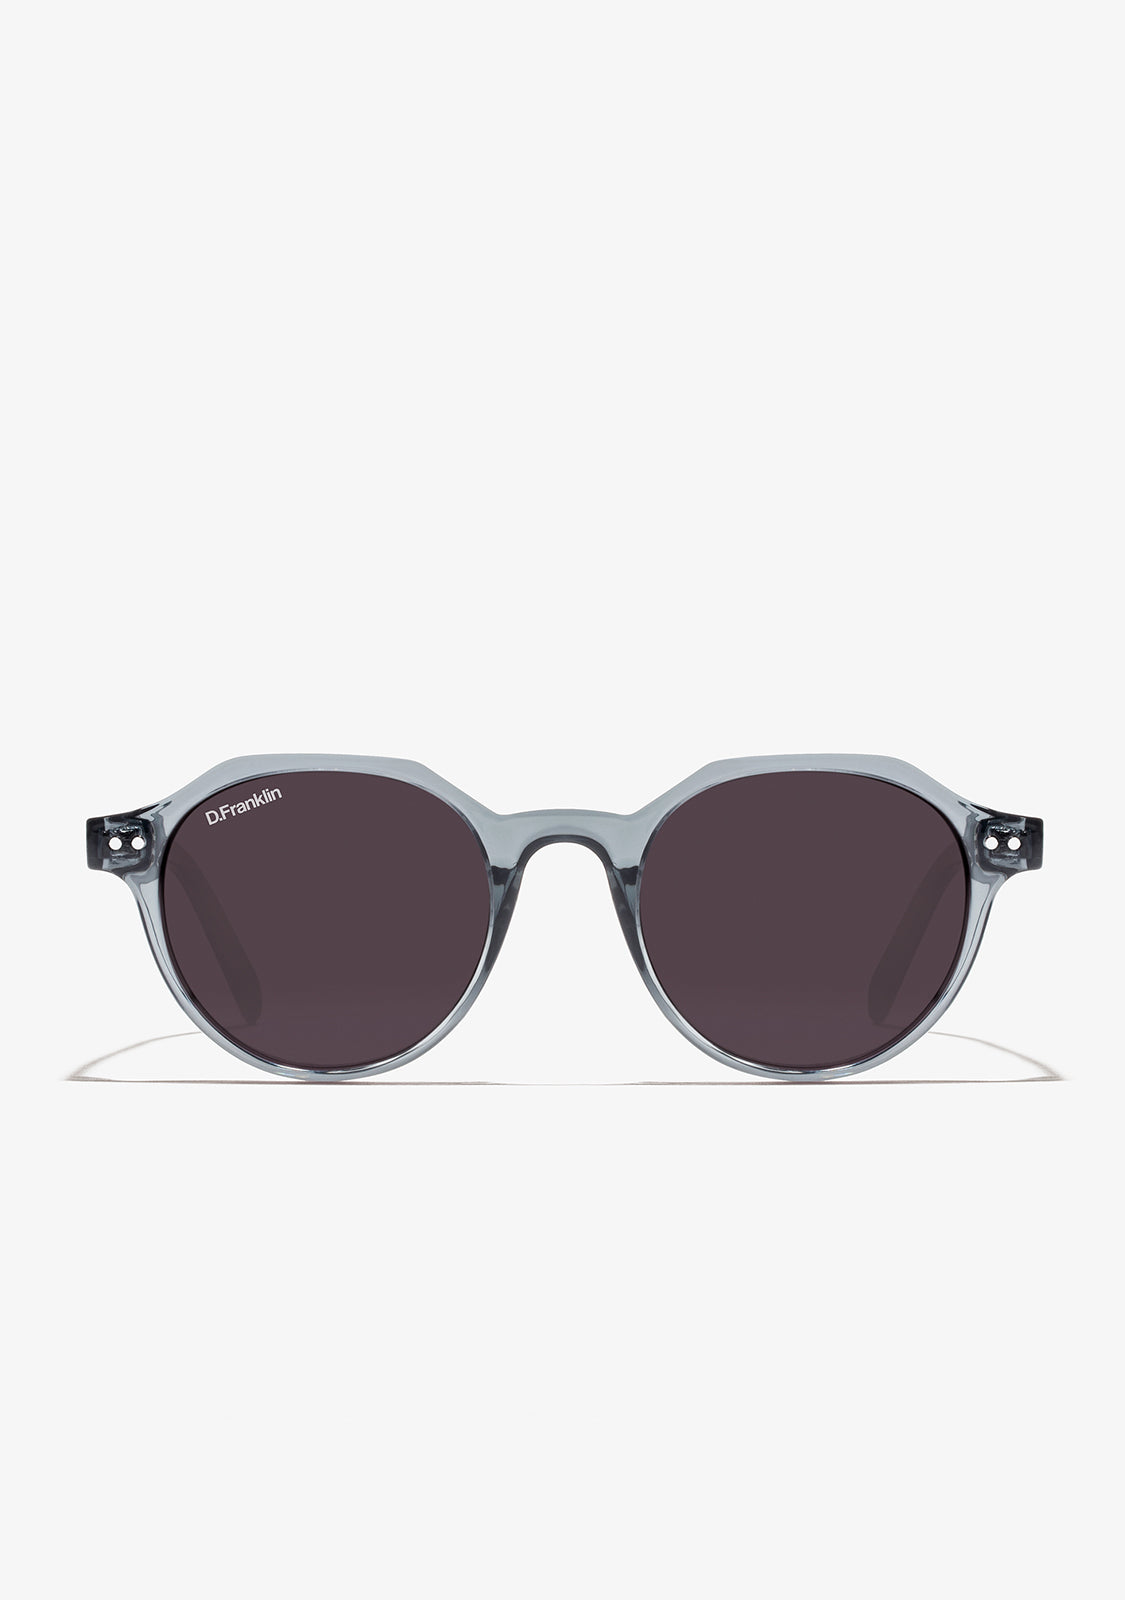 Franklin Sports Pickleball Sunglasses - All Sport UV Glasses for